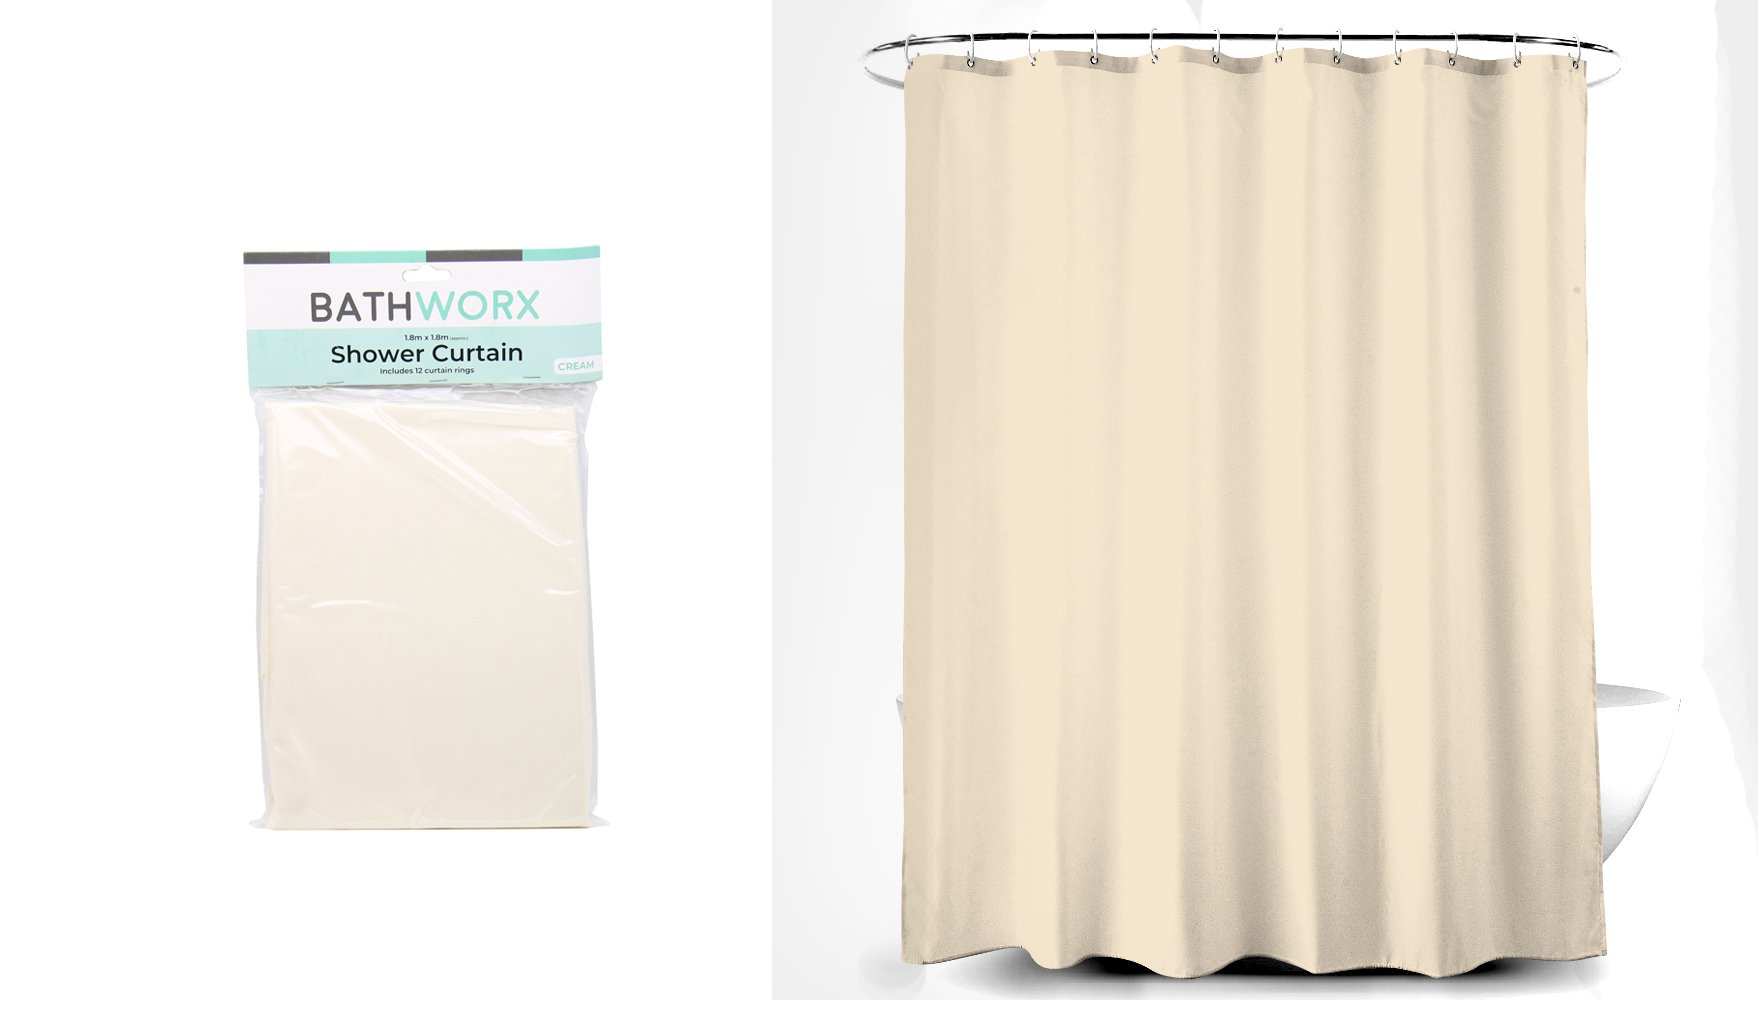 Bathworx Shower Curtain (Cream)